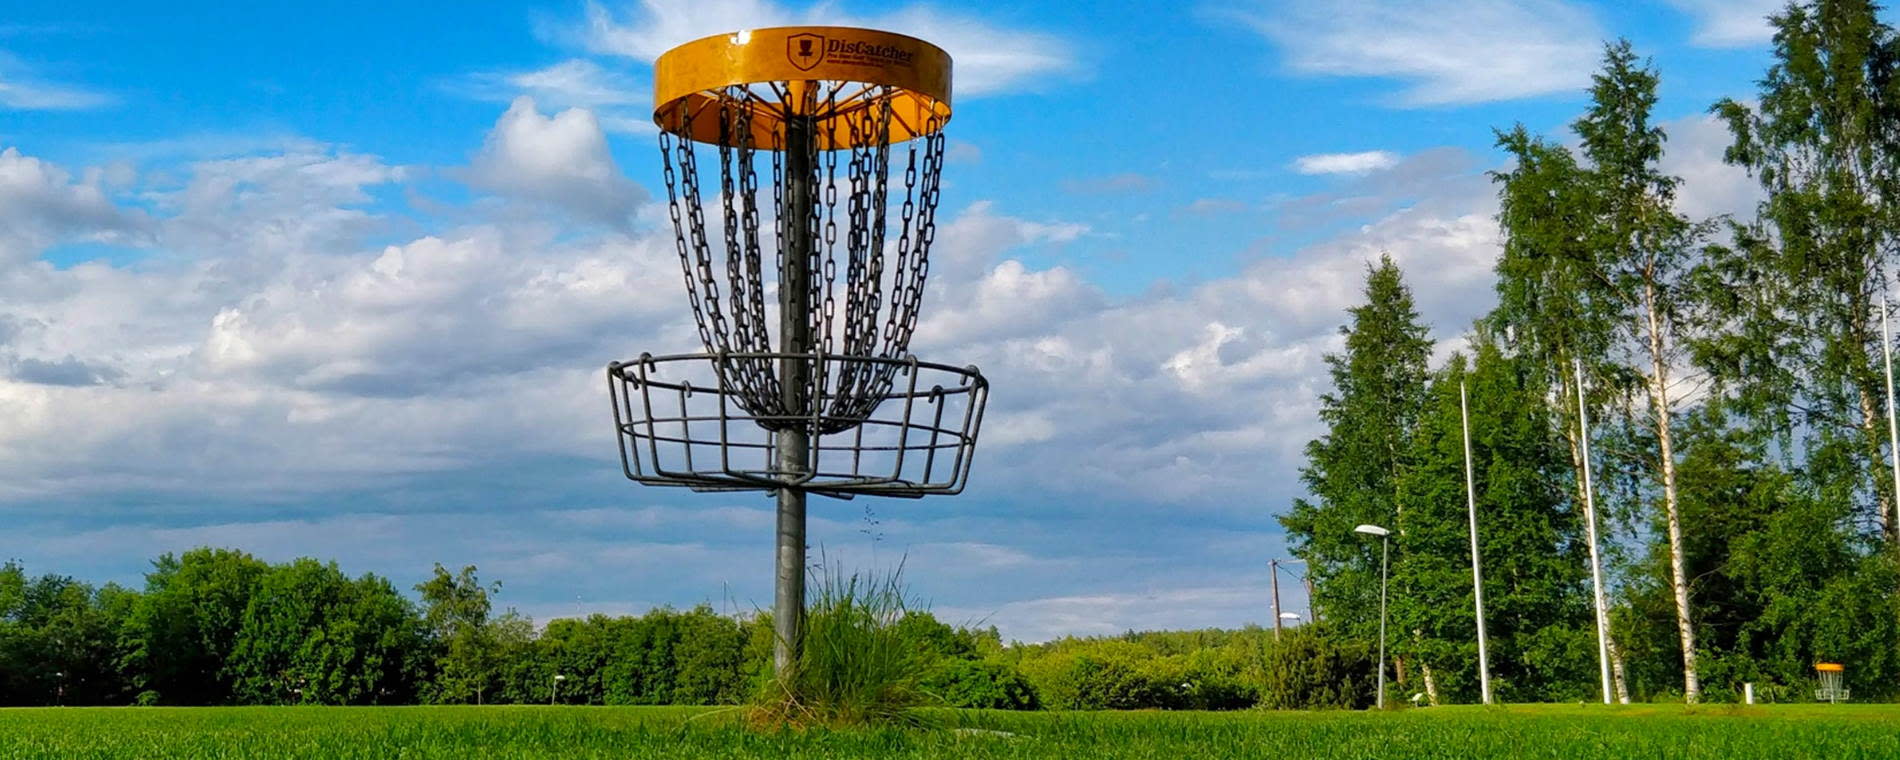 Disc Golf in Wichita, Kansas - Wichita Disc Golf Courses